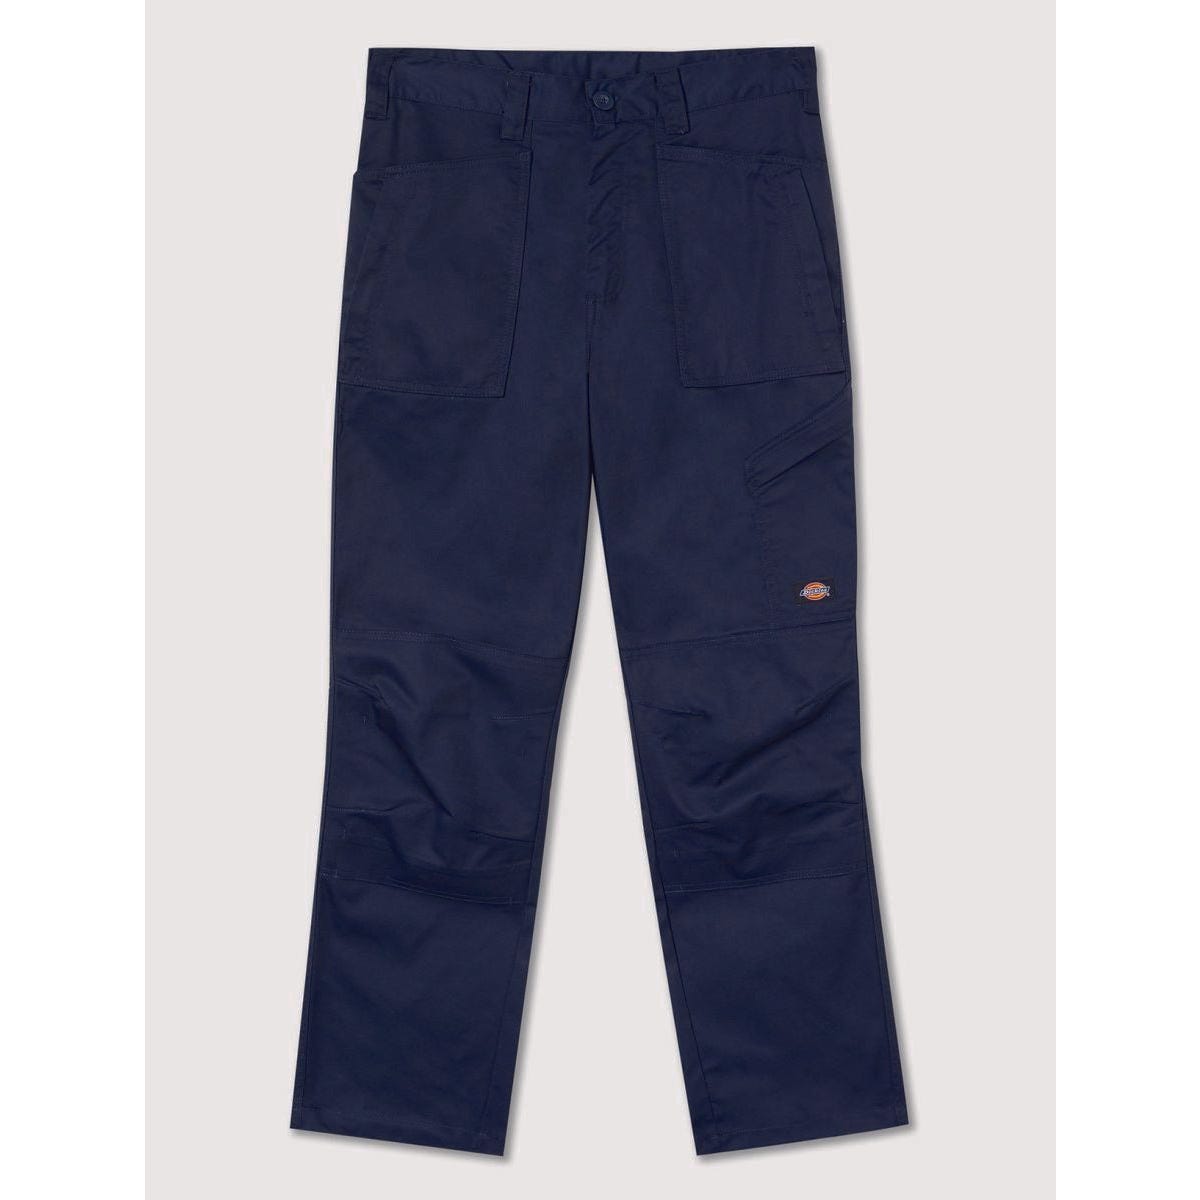 Pantalon de travail Action Flex bleu marine - Dickies - Taille 48 5